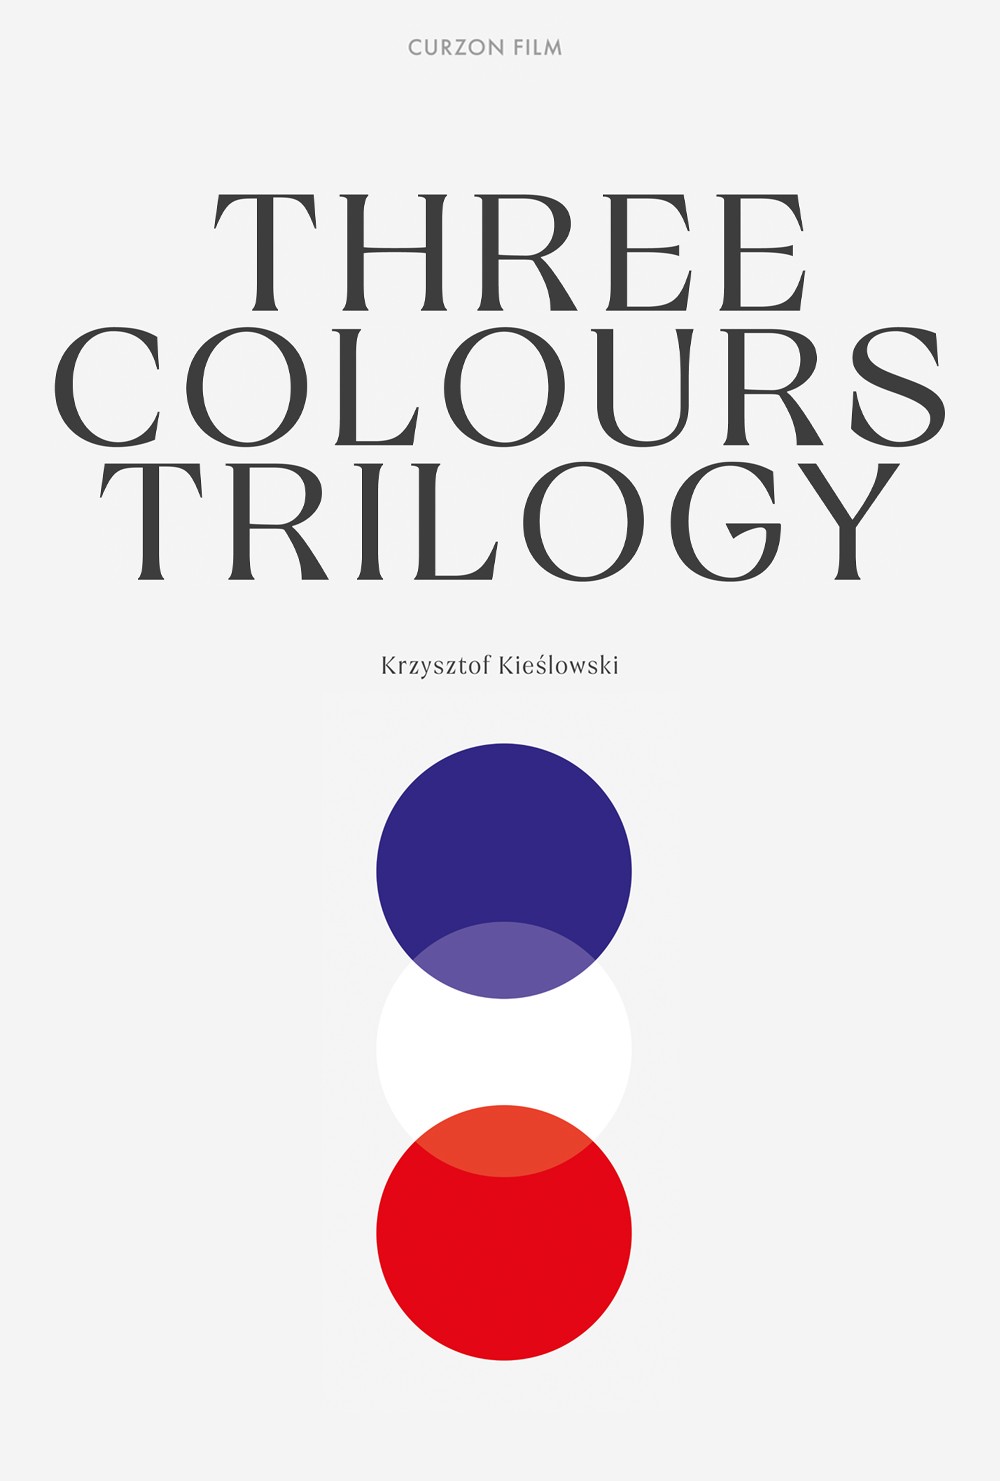 Krzysztof Kieslowski's 'THREE COLOURS TRILOGY'